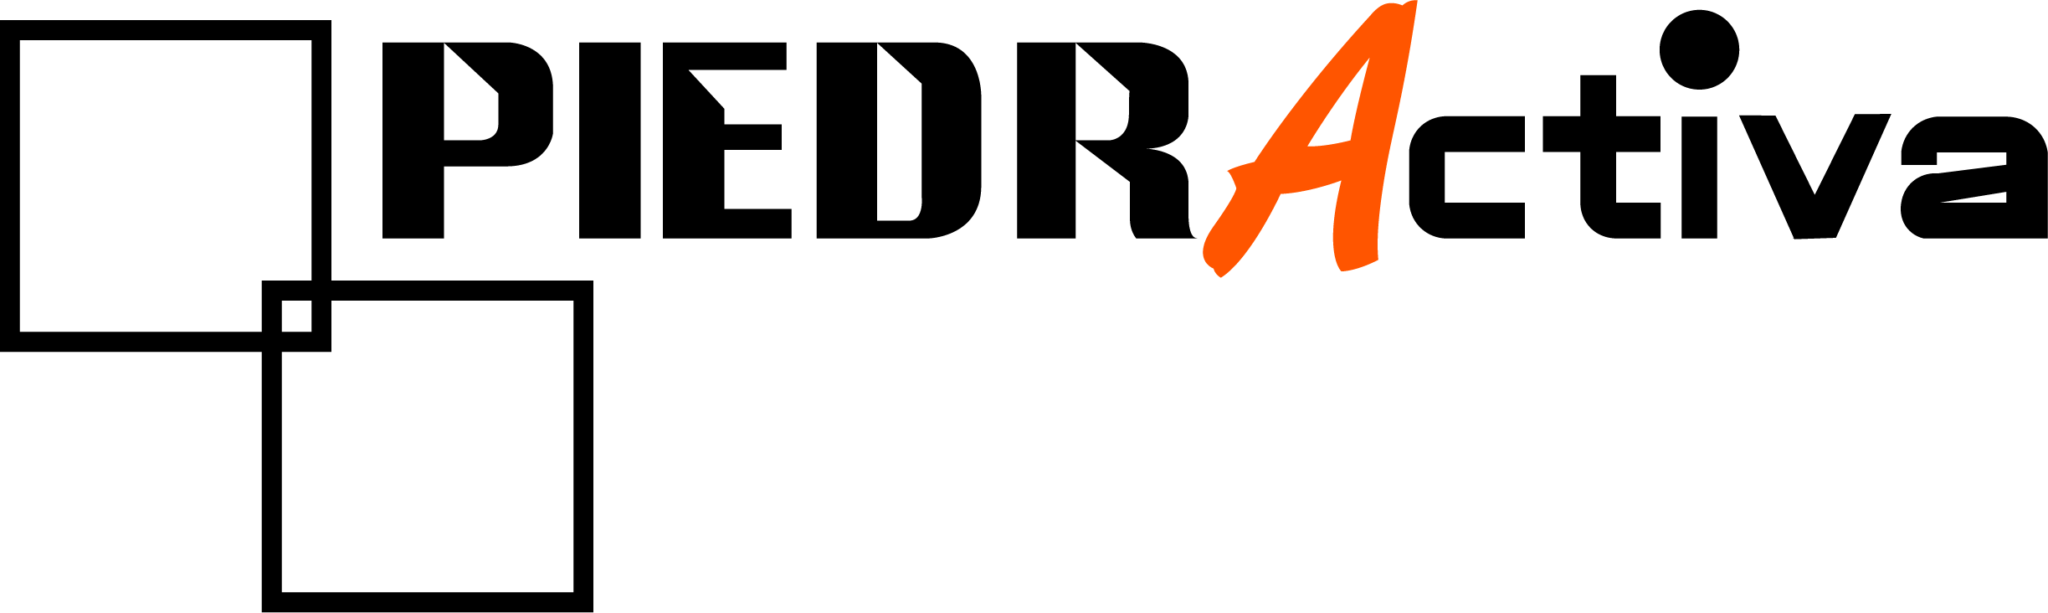 Piedractiva logo